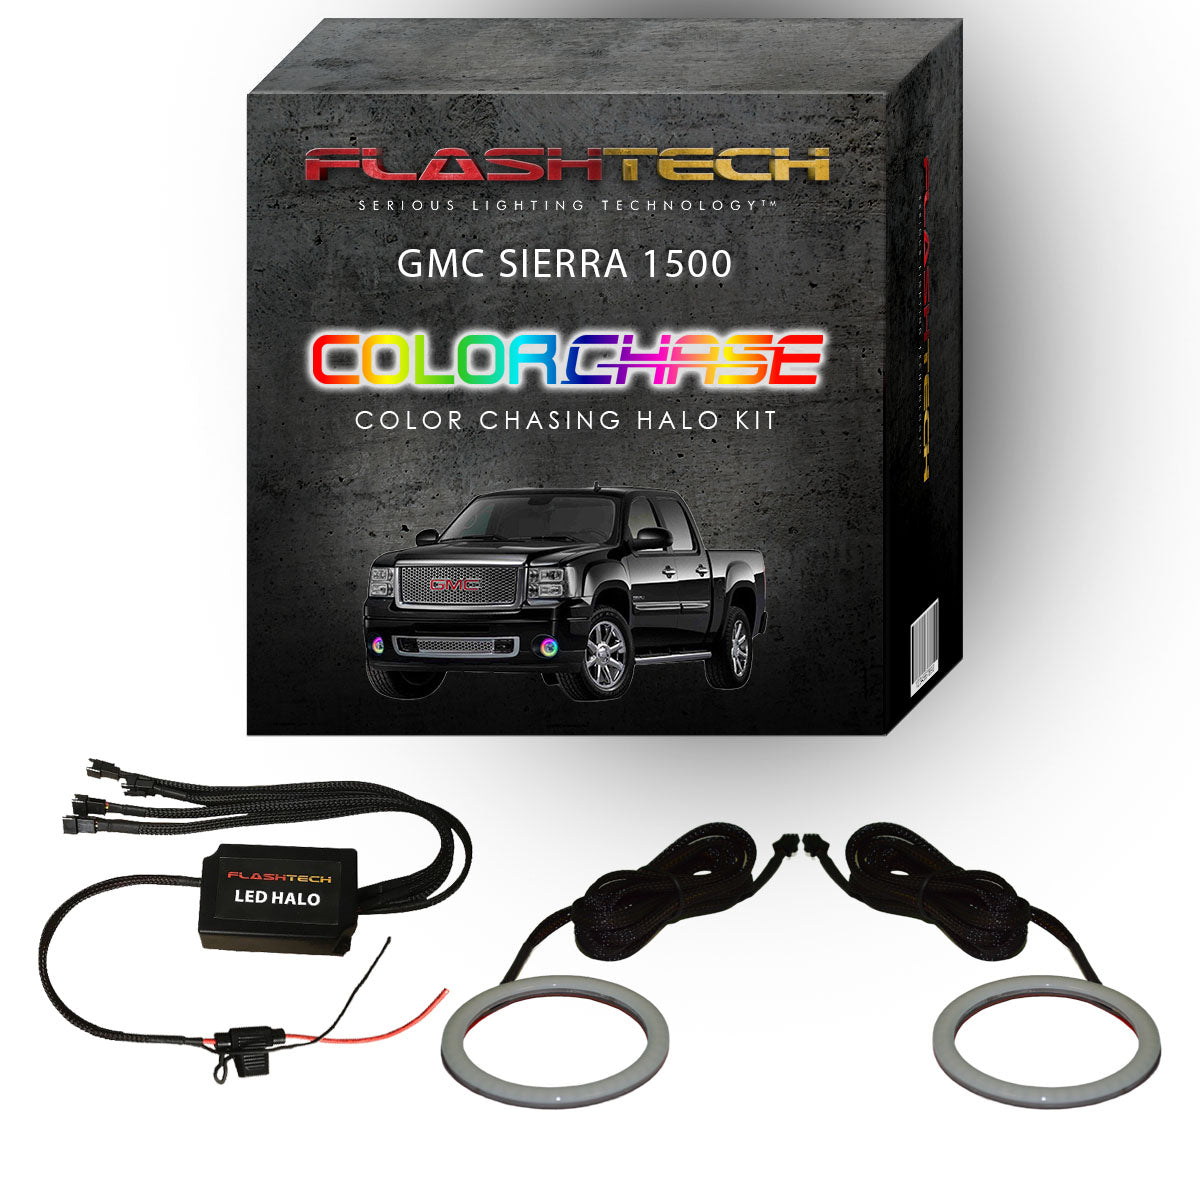 GMC Sierra ColorChase LED Halo Fog Light Kit 2007-2013